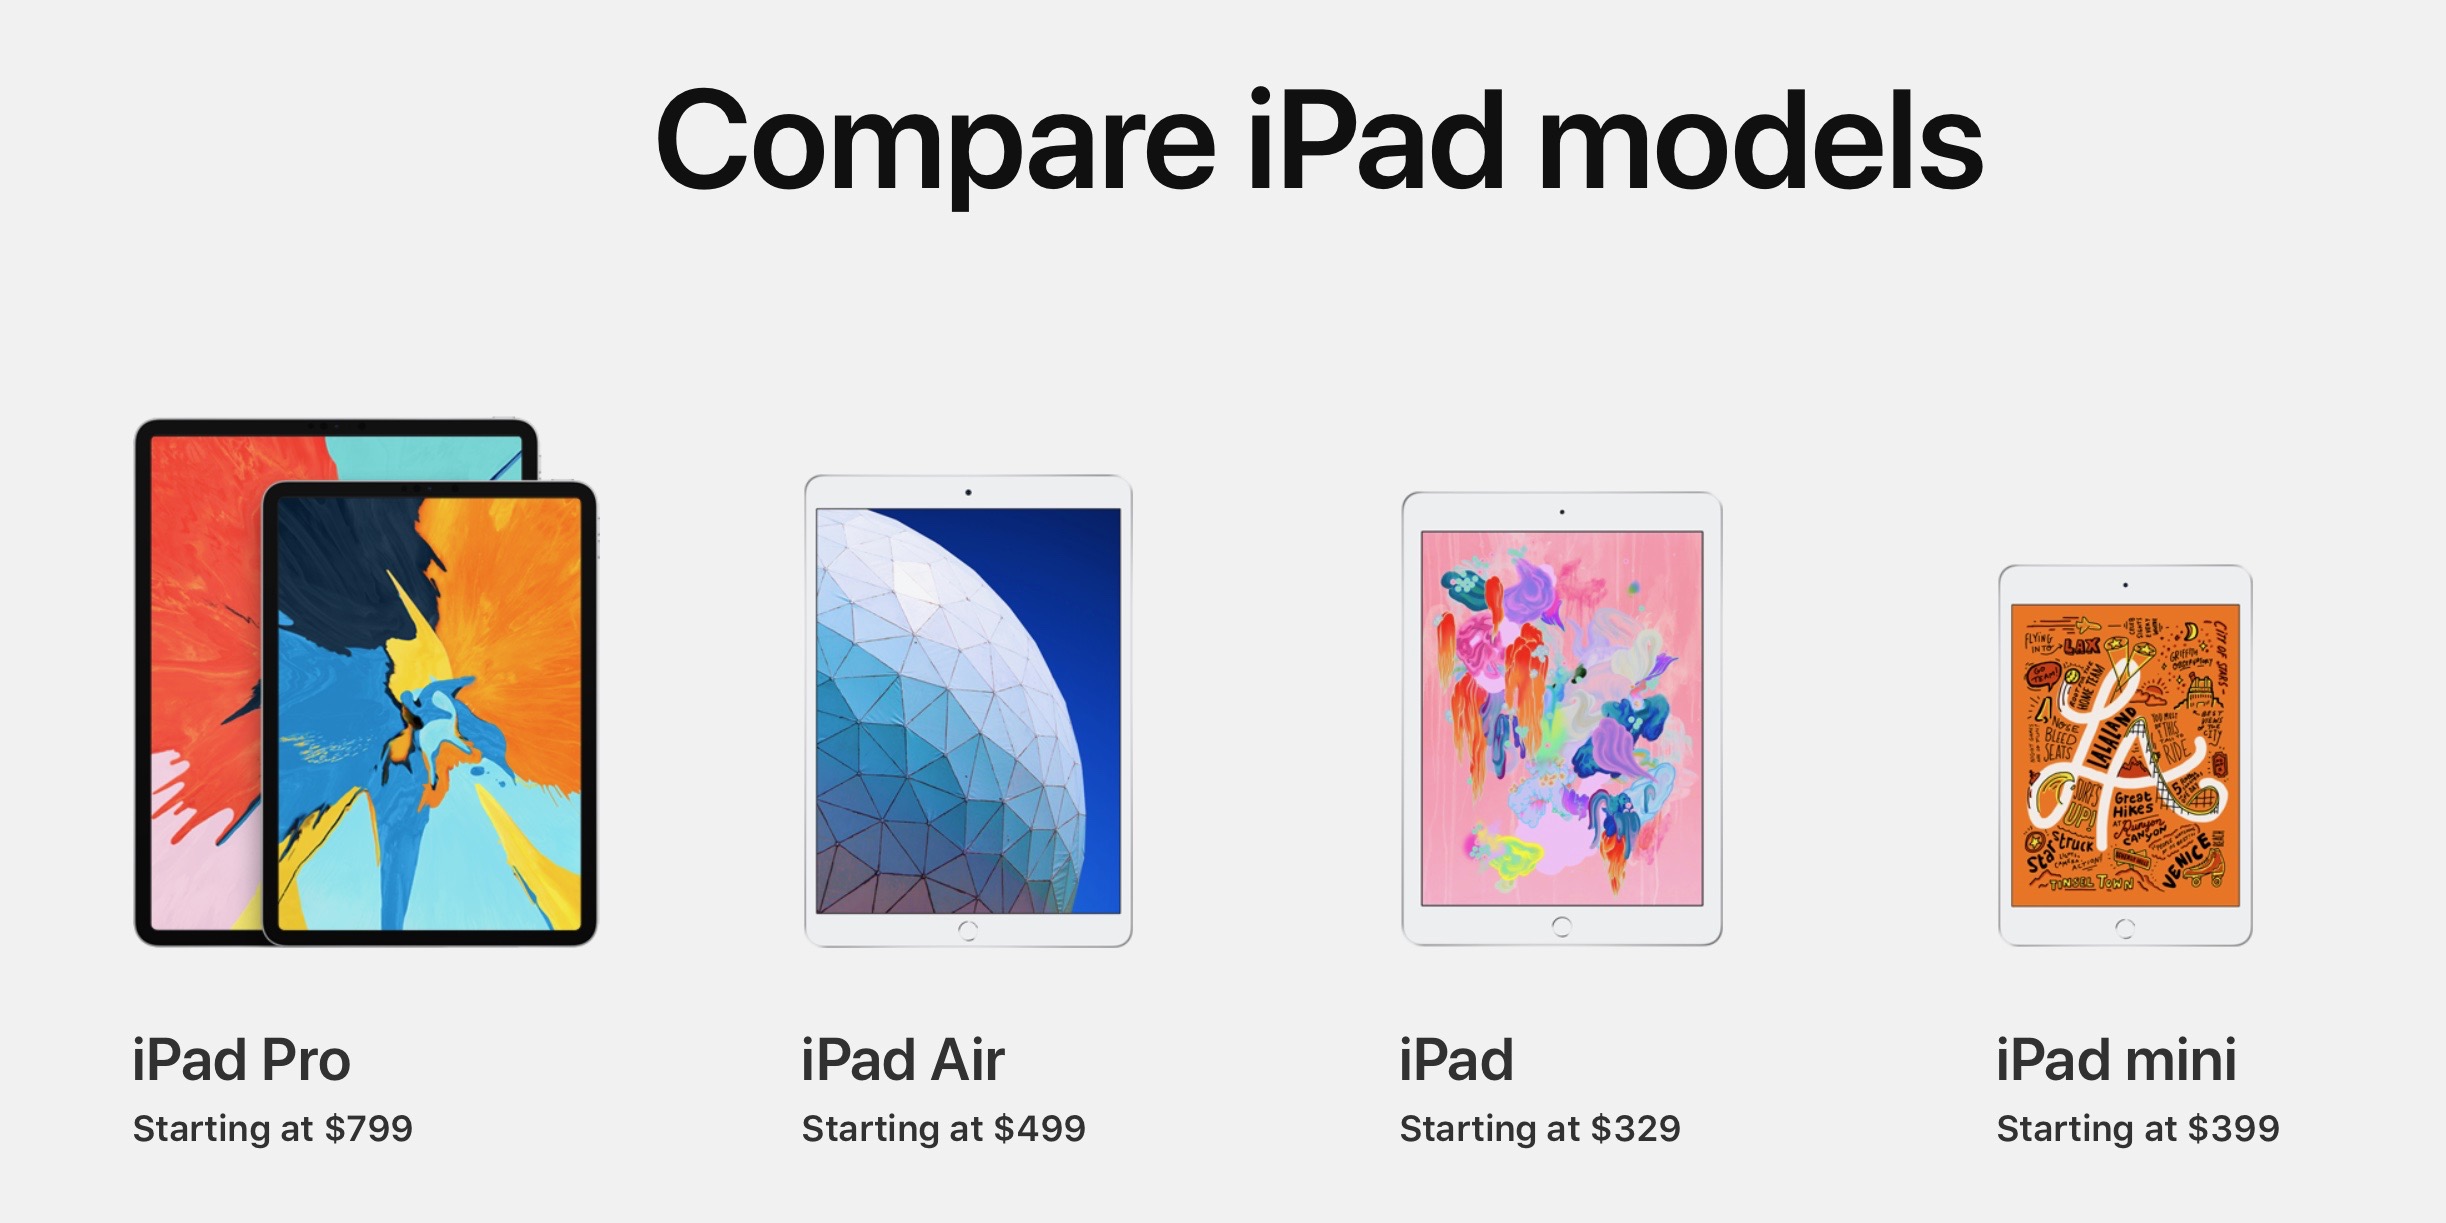 which ipad should i buy